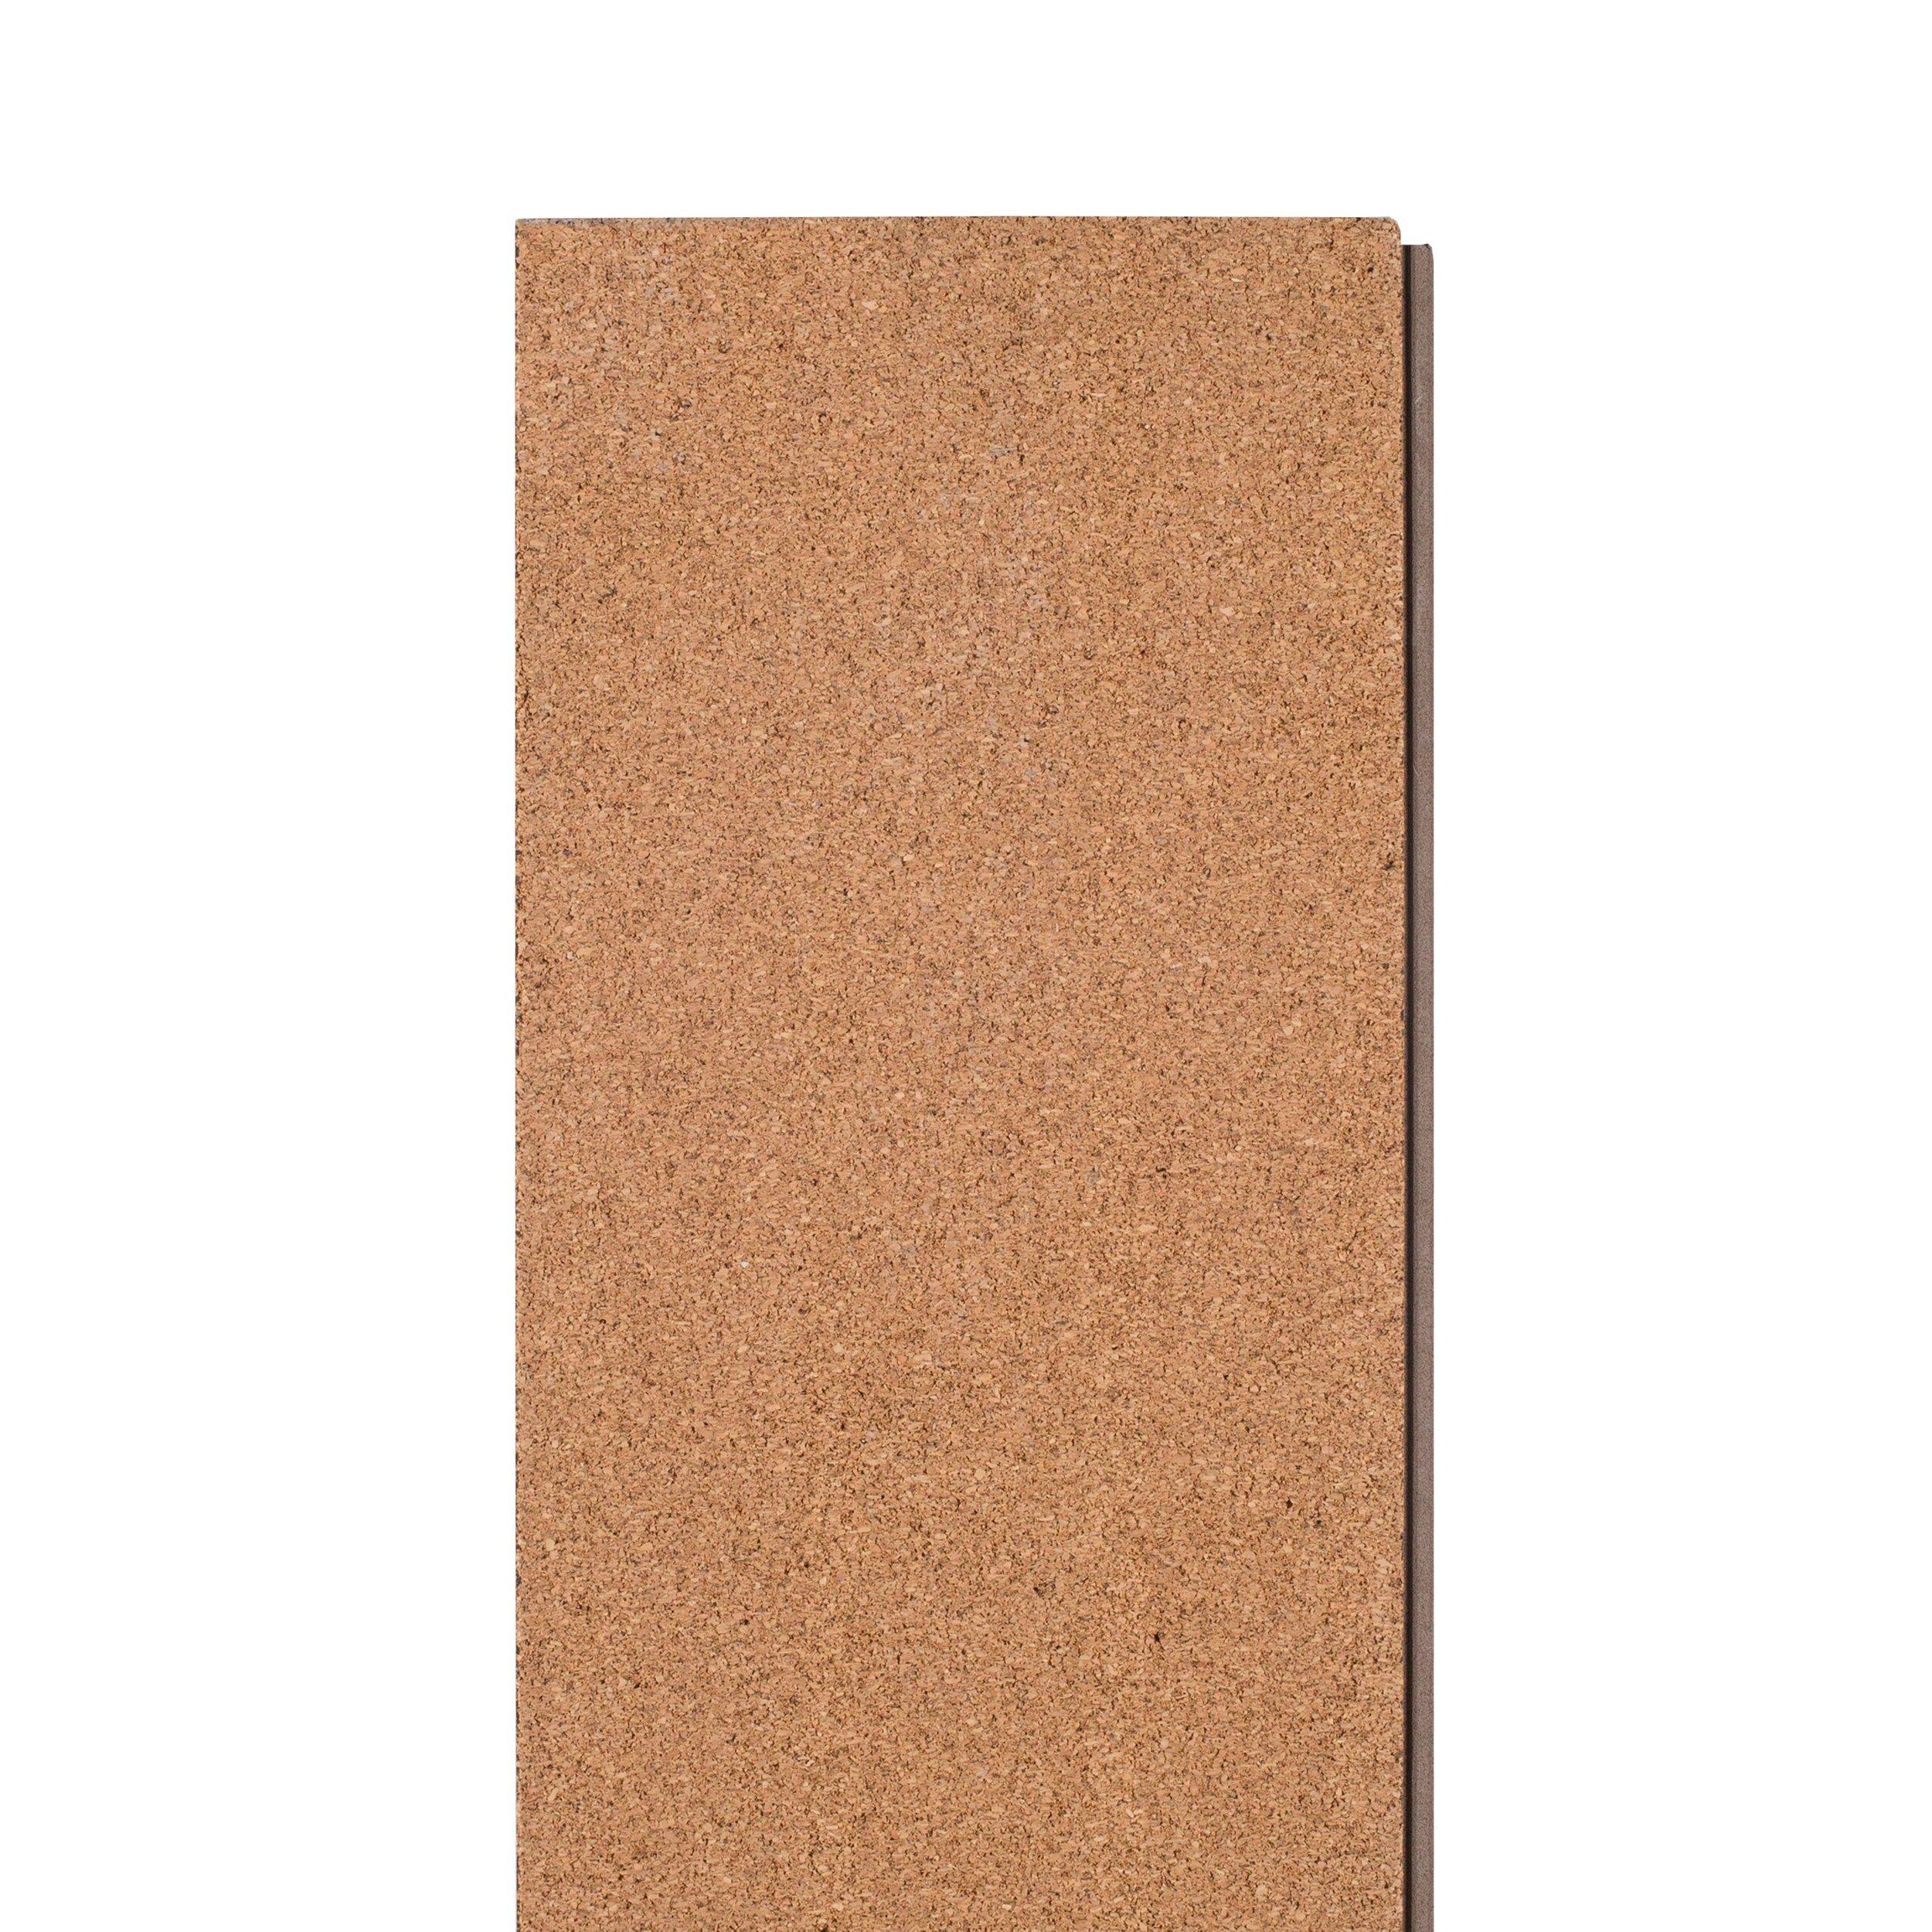 Beckham Honey Rigid Core Luxury Vinyl Plank - Cork Back